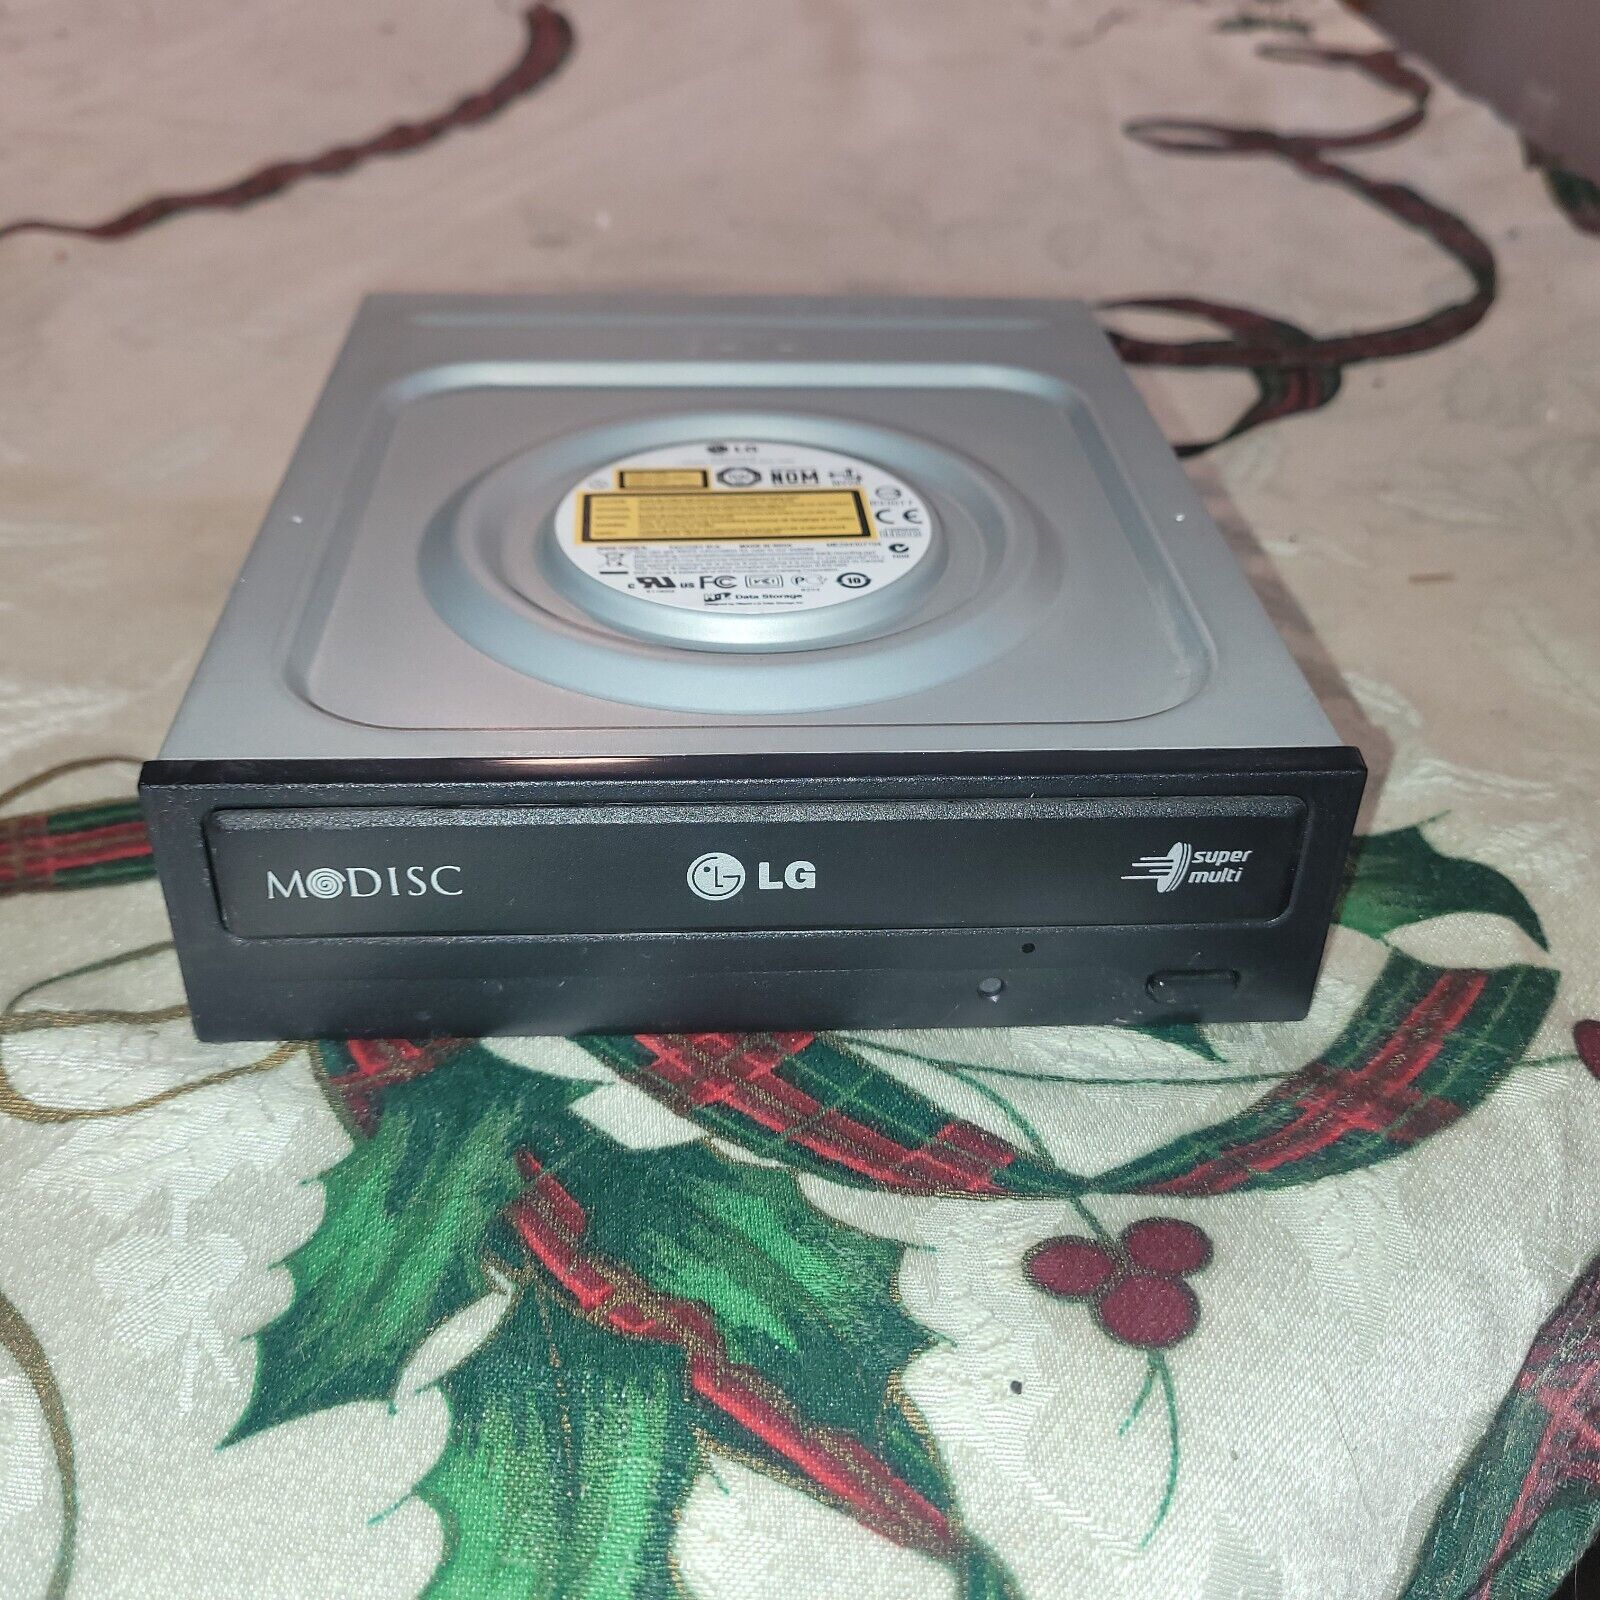 LG GH24NS95 SATA 24X Super-Multi Internal DVD+RW DVD Re-Writer Burner Drive